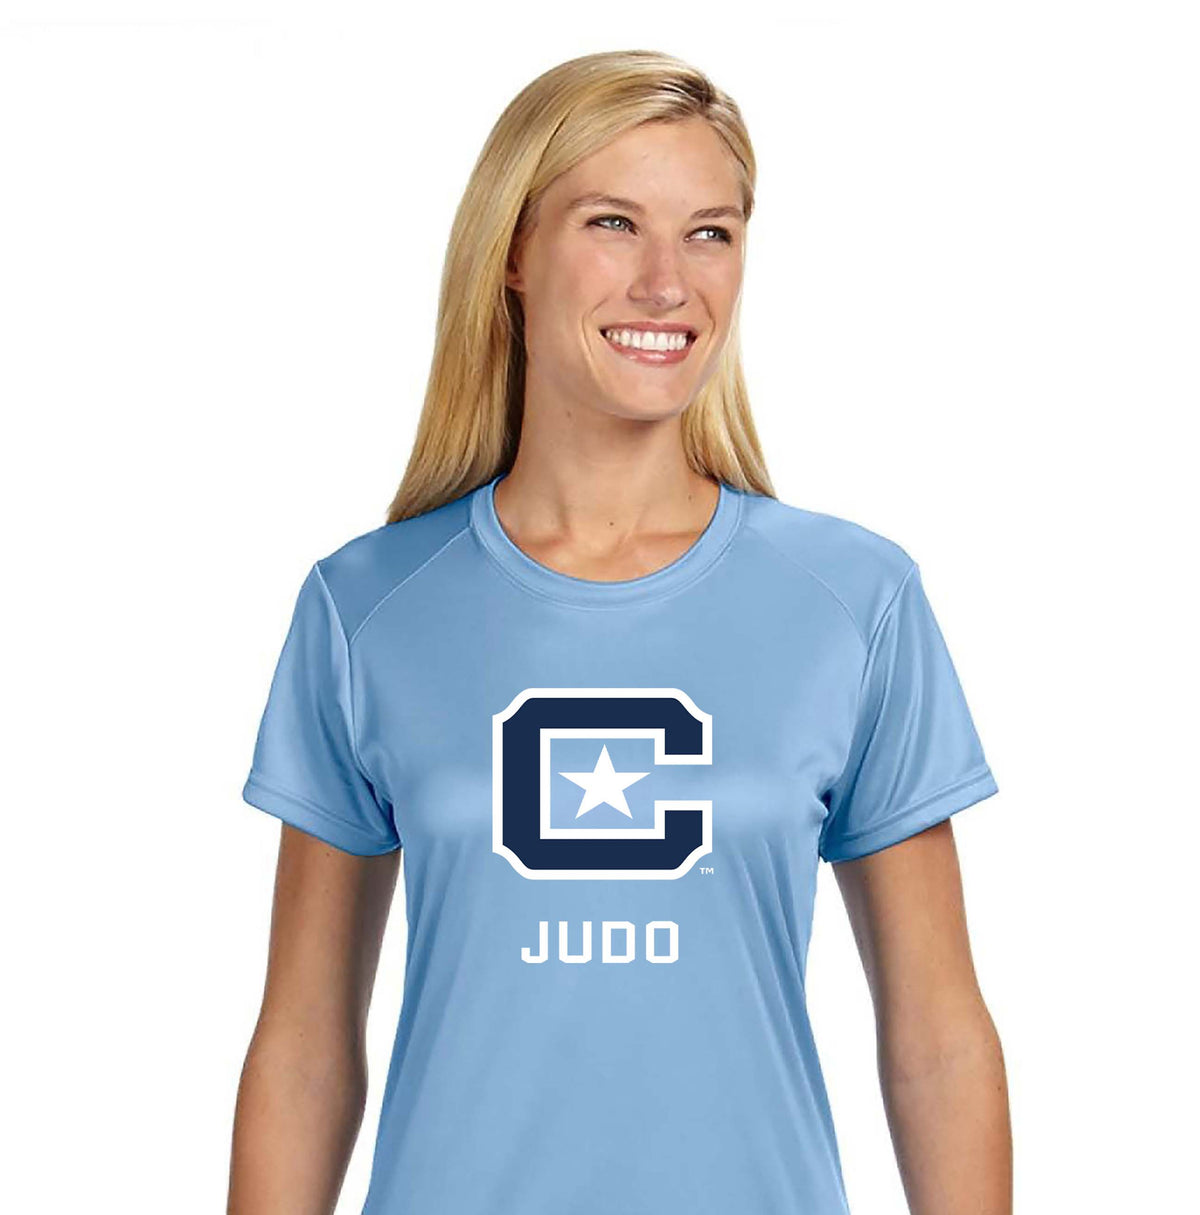 The Citadel, Club Sports - Judo, A4 Ladies' Cooling Performance T-Shirt- Carolina Blue